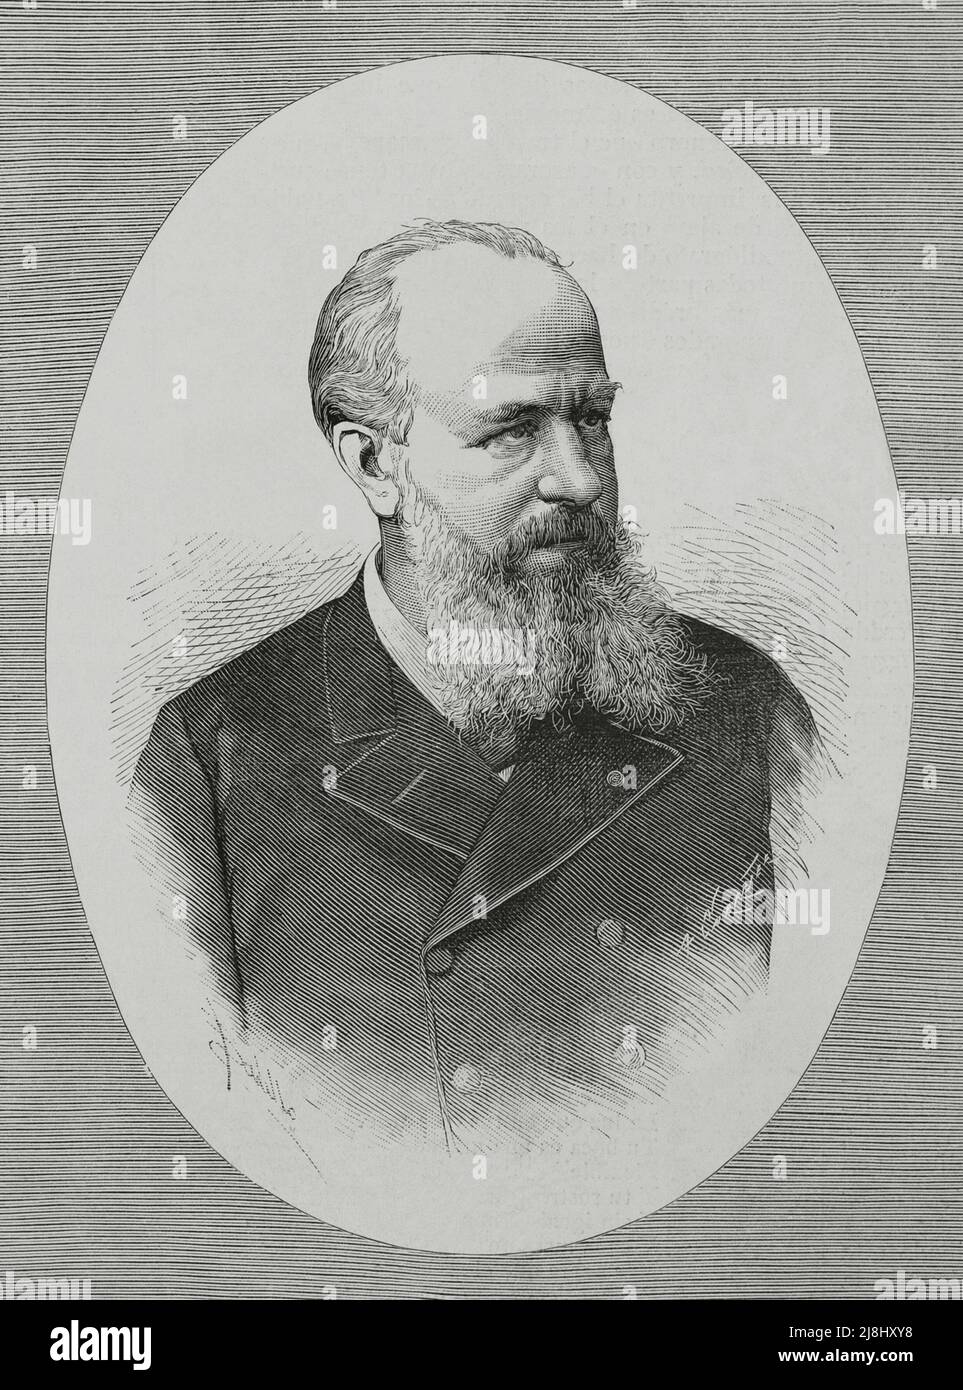 Louis de Wecker (1832-1906). French ophthalmologist. Portrait. Engraving by Arturo Carretero, 1882. Stock Photo